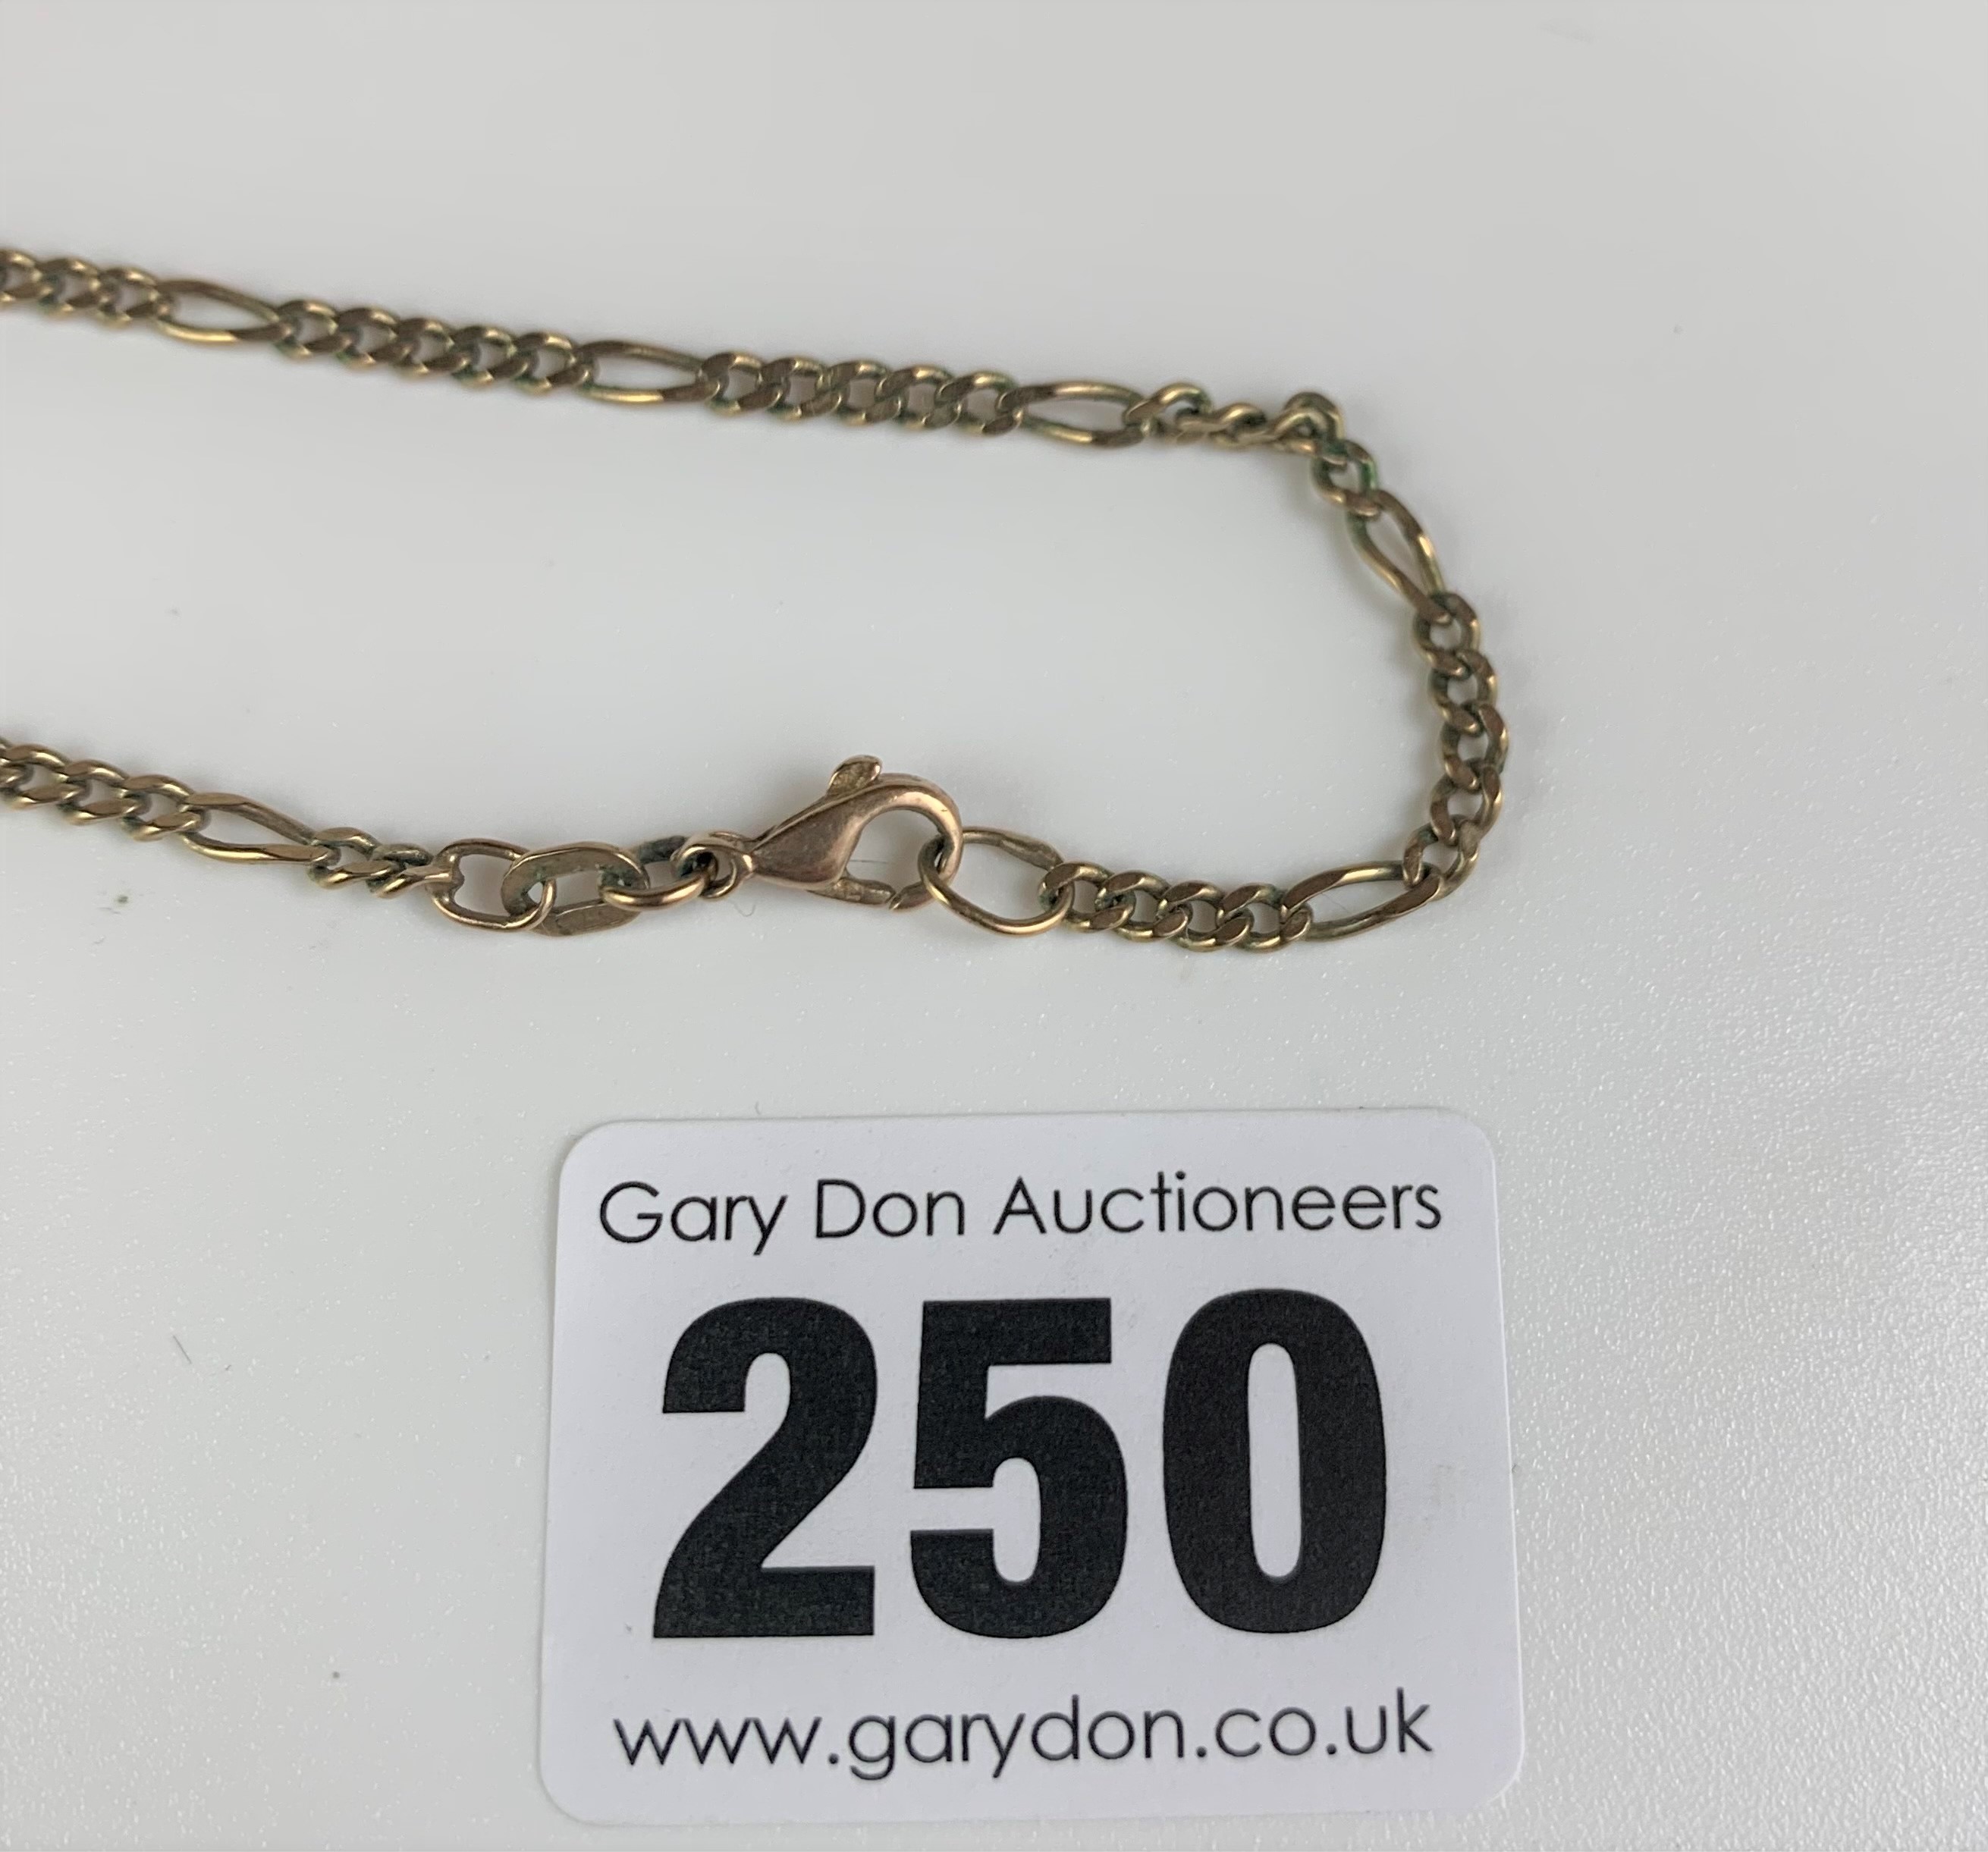 9k gold necklace, length 23”, w: 7.1 gms - Image 3 of 3